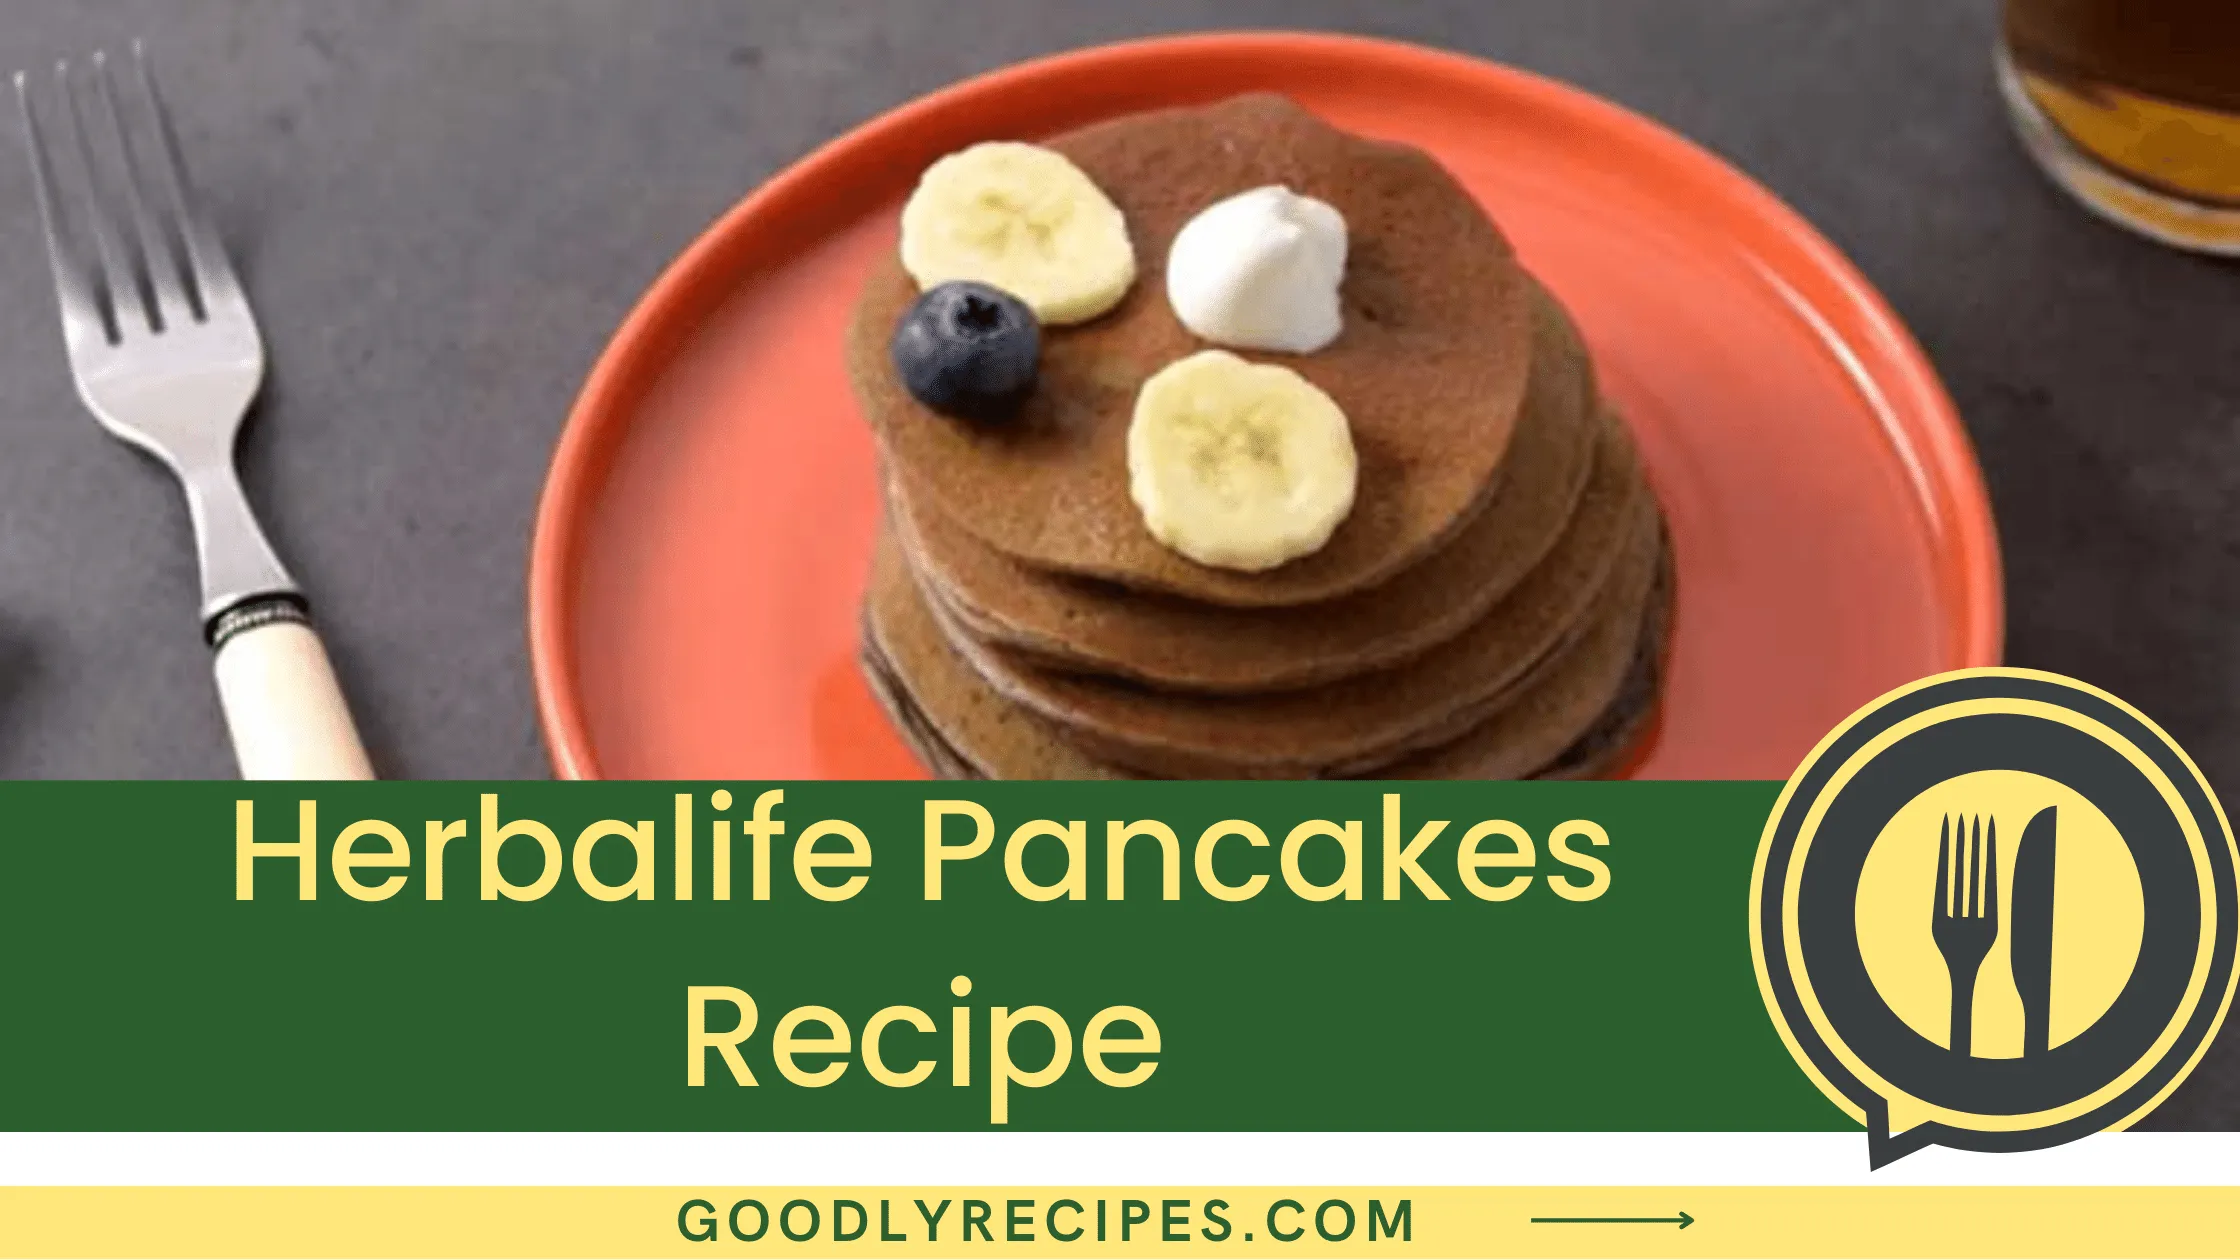 Herbalife Pancakes Recipe - For Food Lovers